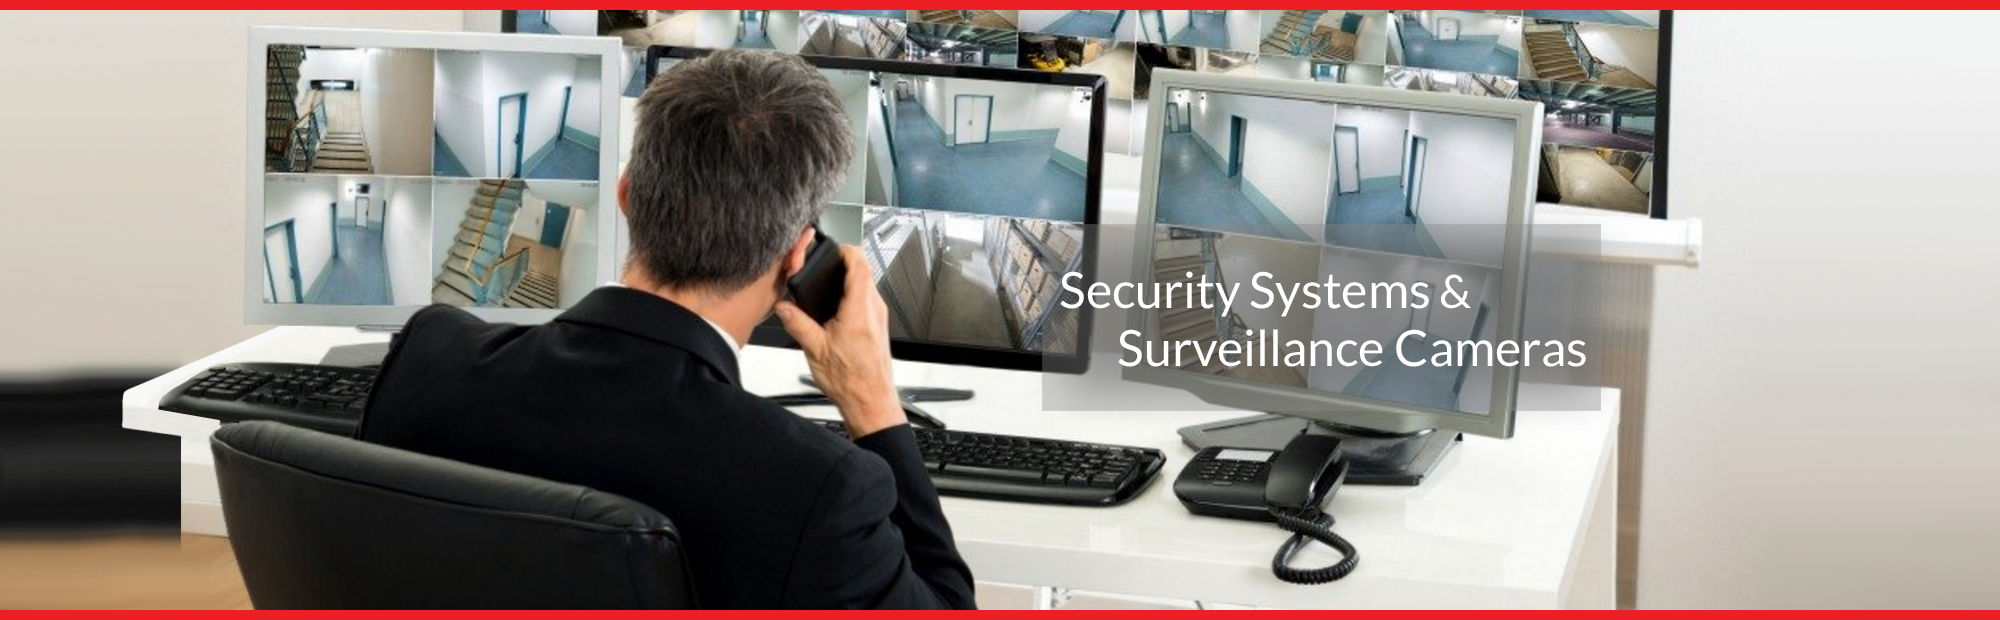 Security Cameras & Surveillance Systems